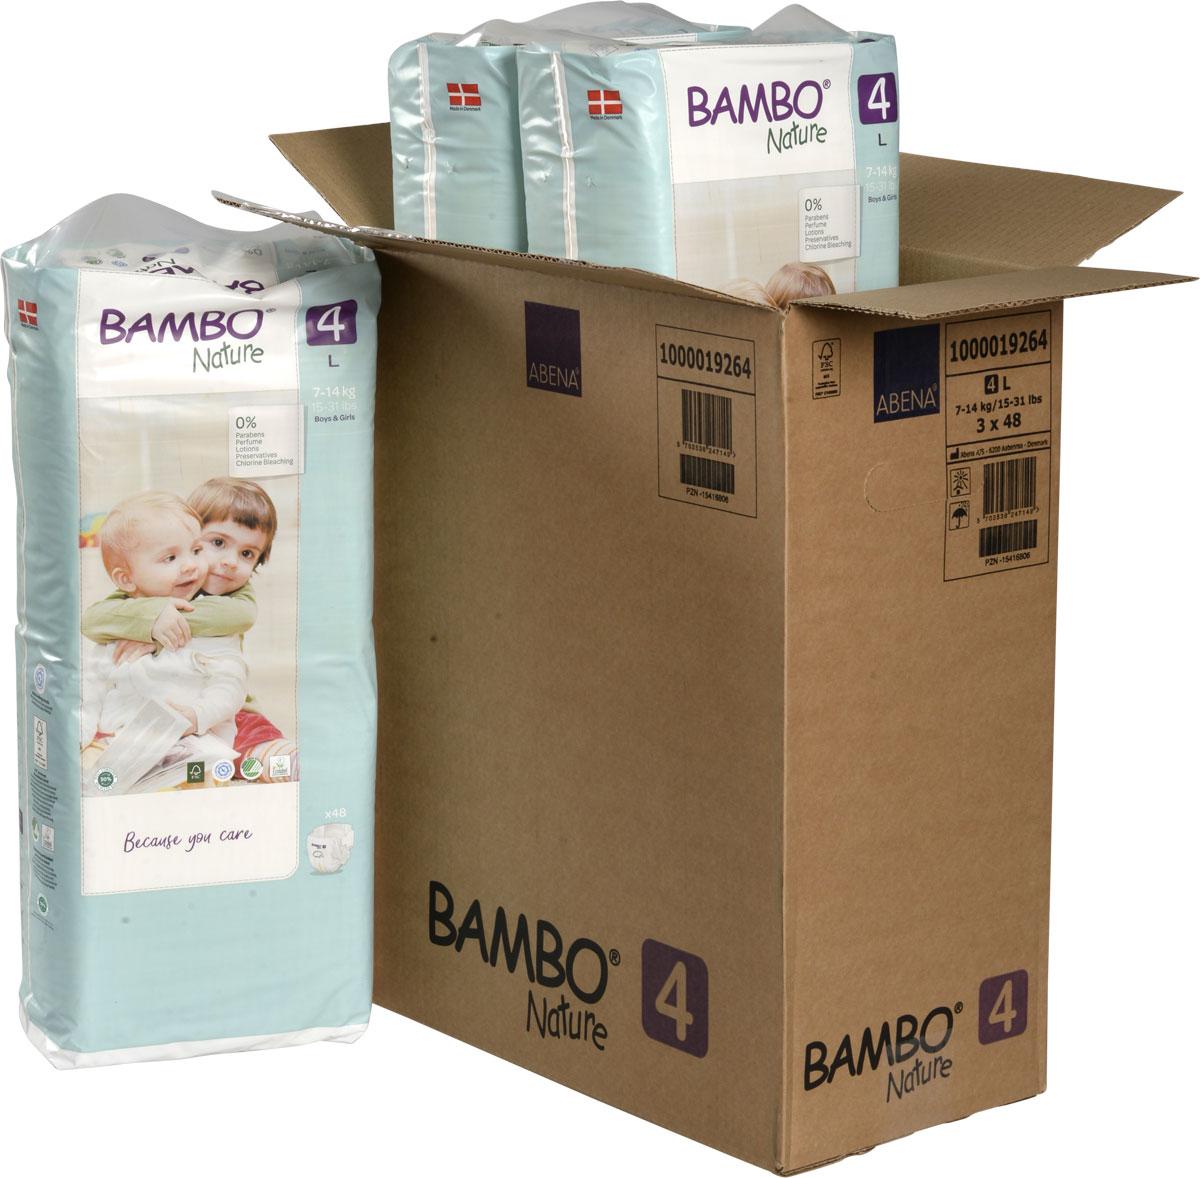 Bambo NATURE - Babywindeln Gr. 4 MAXI [L] 7-14kg - 144 Stück BIGPack